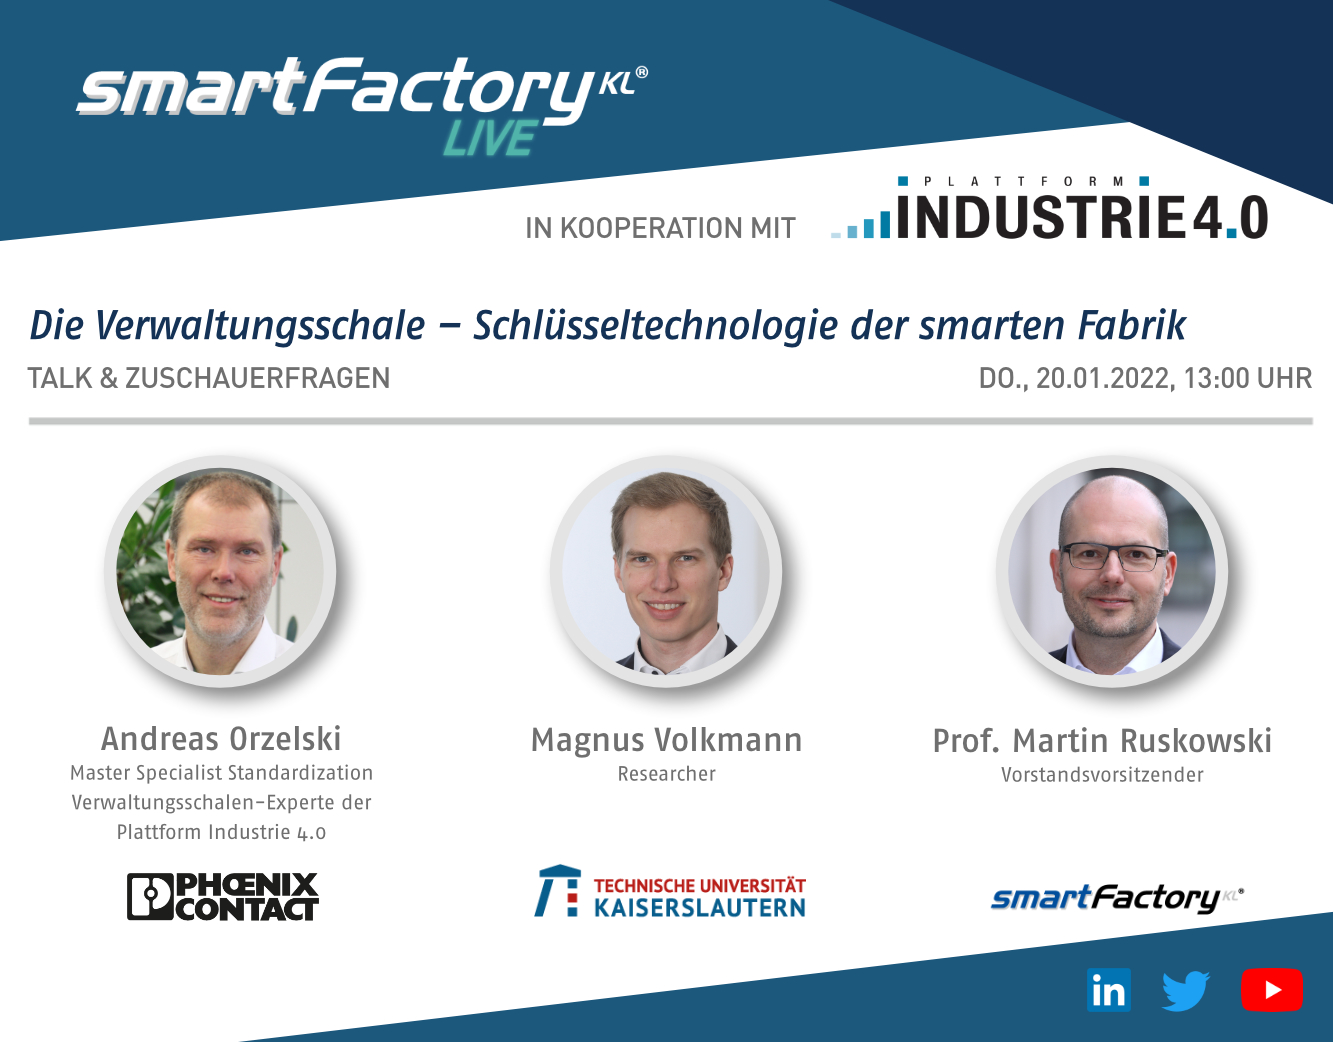 SmartFactory-KL LIVE in Kooperation mit Plattform Industrie 4.0